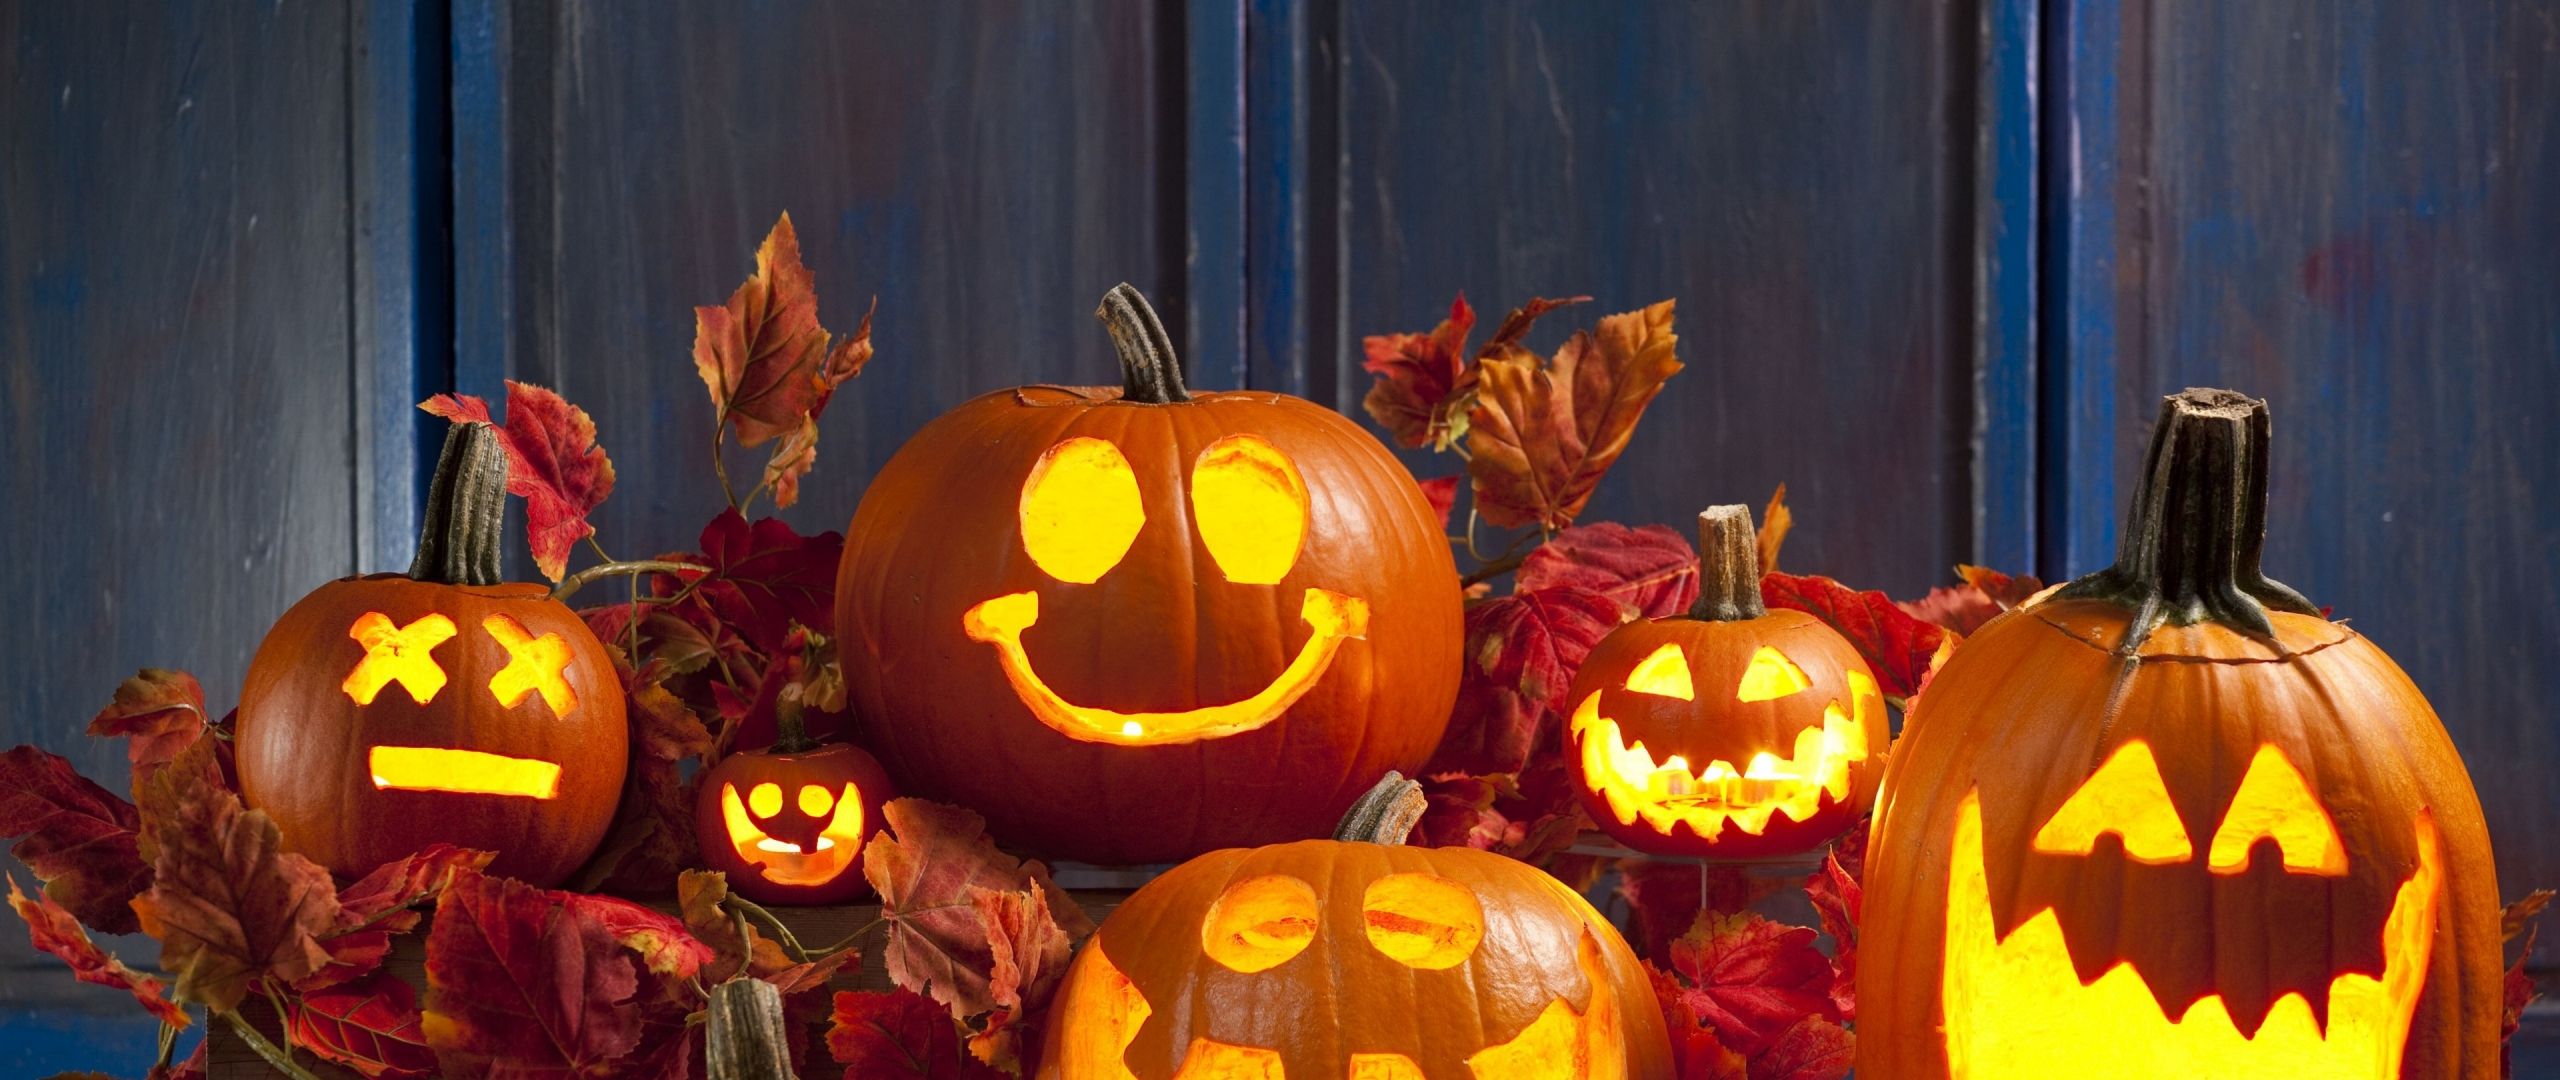 Free download Download Halloween pumpkin 4k 8510 Dual Wide display 1080p [ 2560x1080] for your Desktop, Mobile & Tablet. Explore Halloween Pumpkin 1080p Wallpaper. Halloween Pumpkin 1080p Wallpaper, Halloween Pumpkin